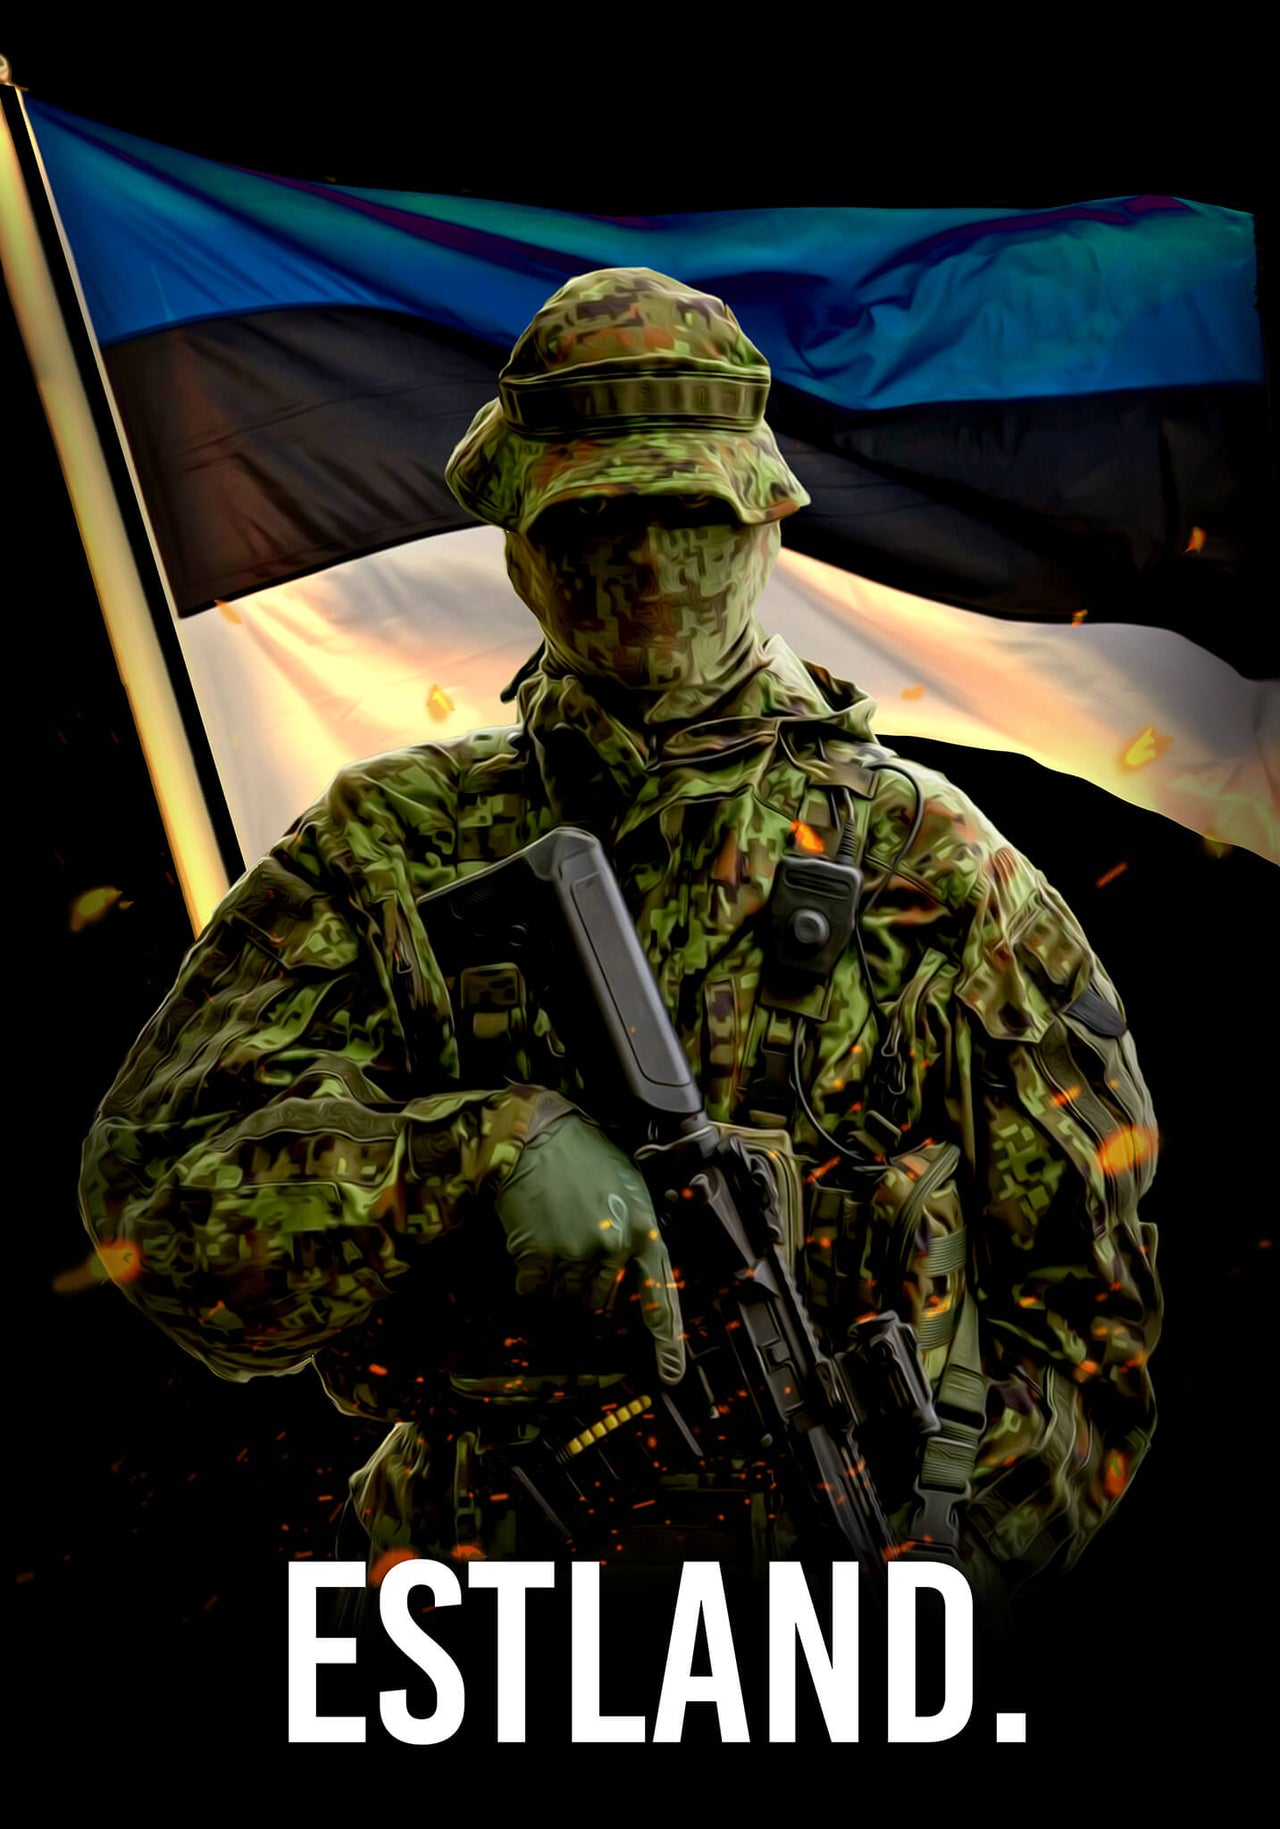 ESTLAND - militär poster